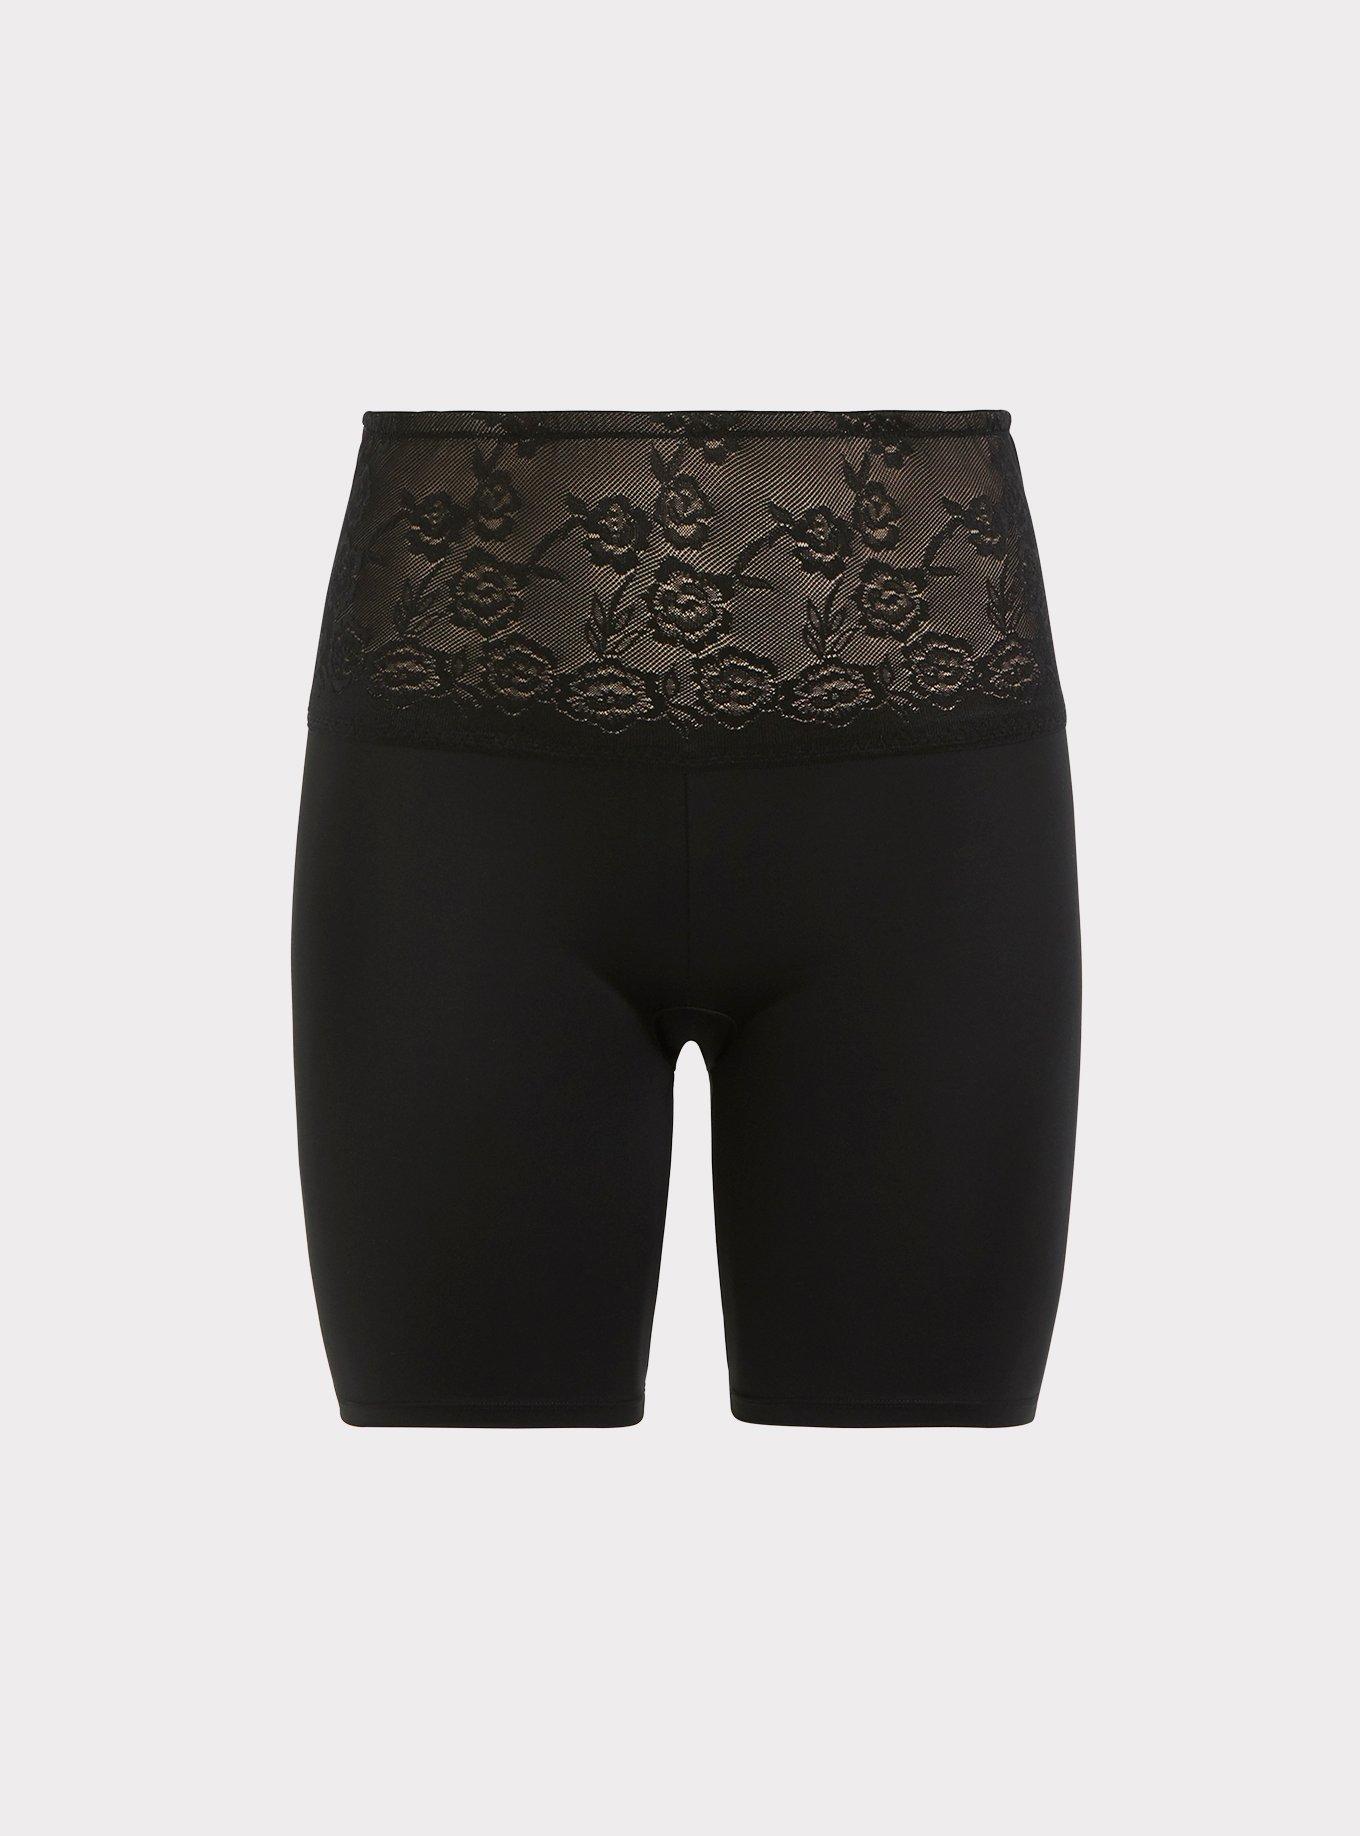 Plus Size YOURS FOR GOOD Black Lace Trim Legging Shorts